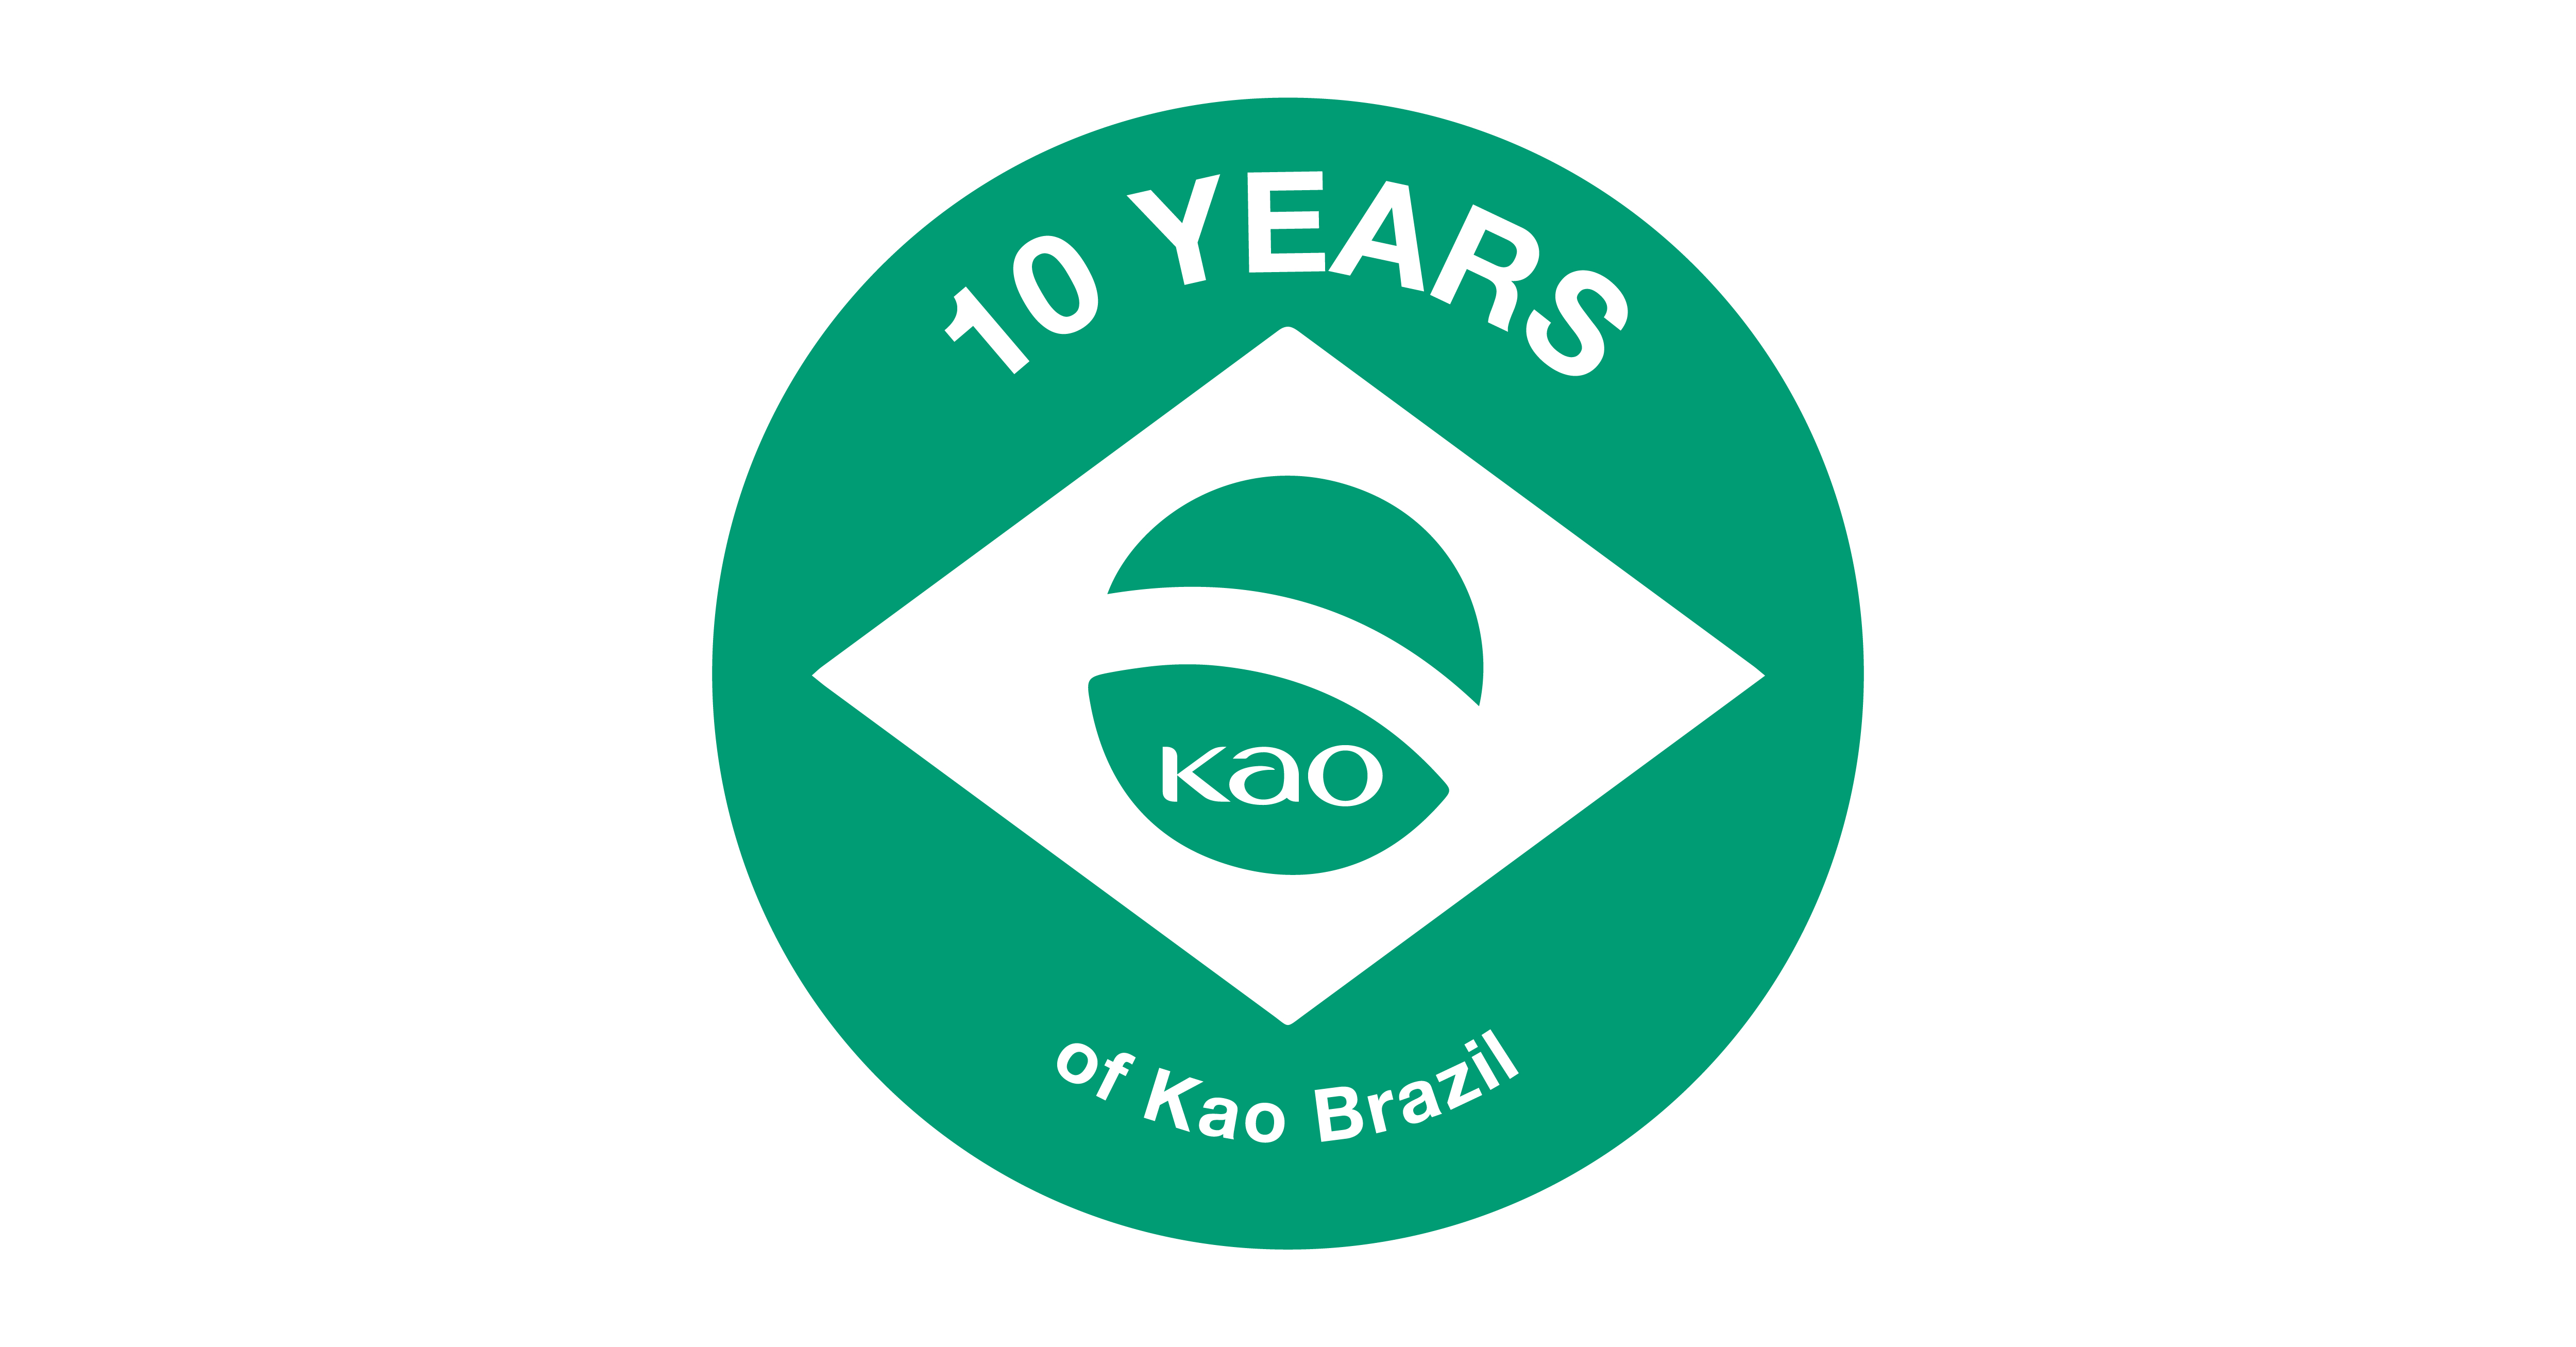 Kao Brazil celebrates its 10th anniversary